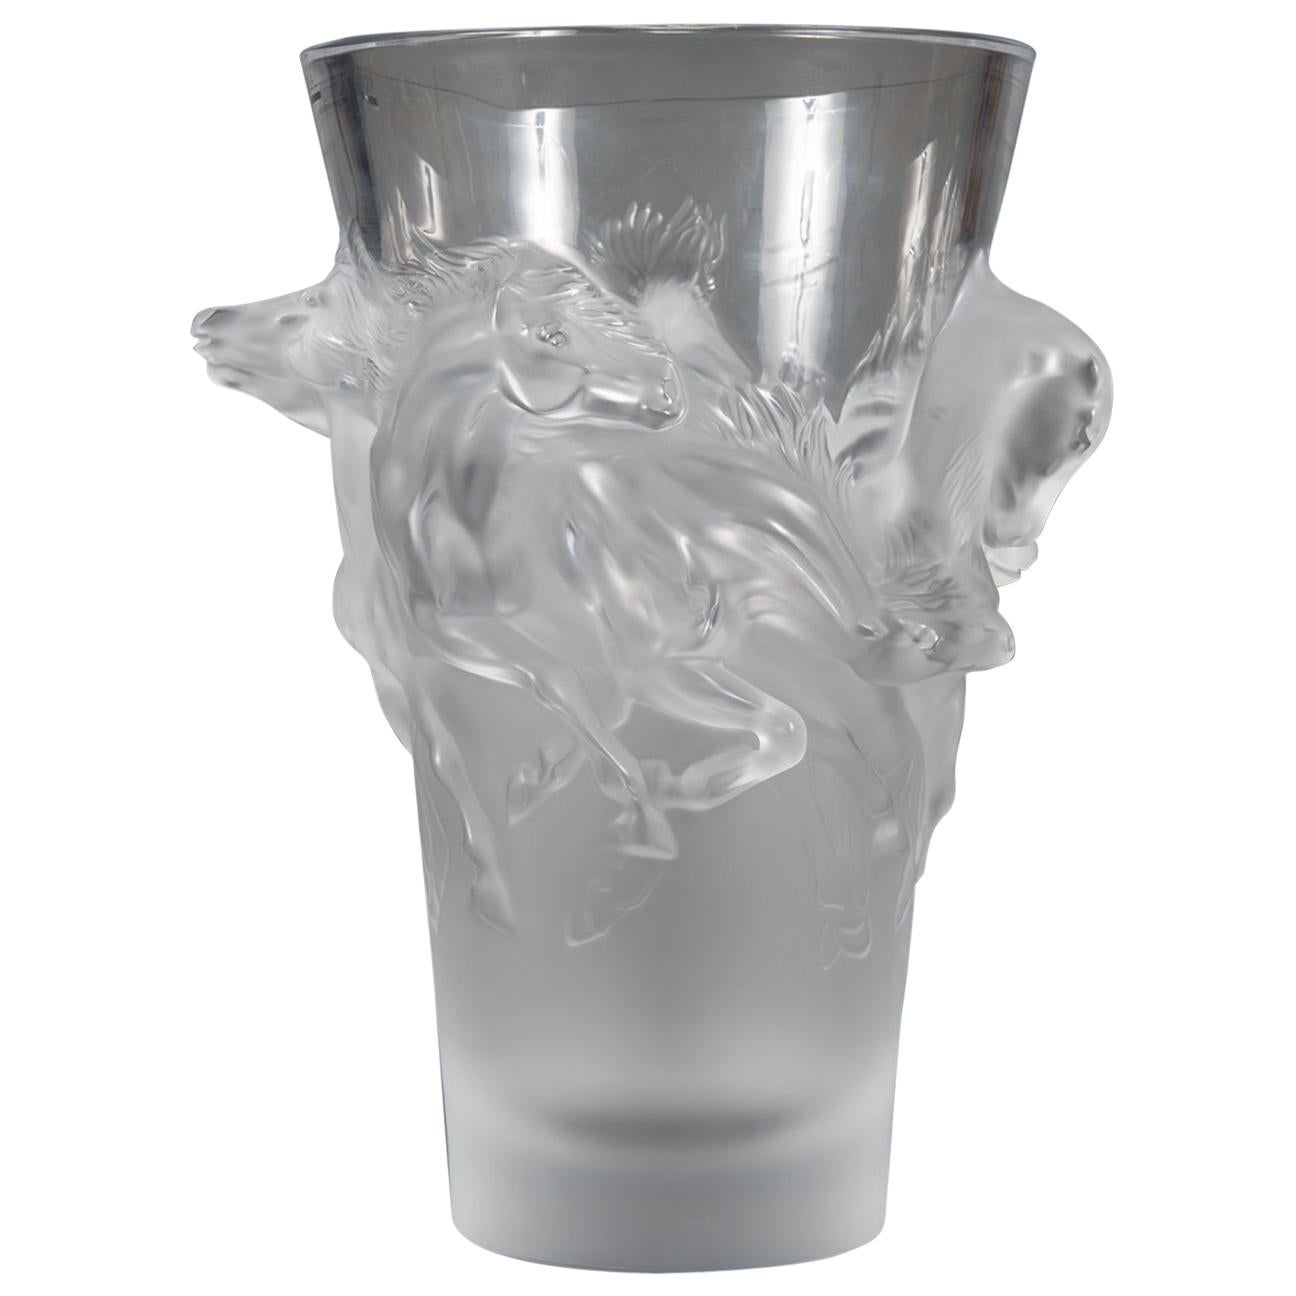 Fine Lalique France Limited Edition Equus Crystal Vase